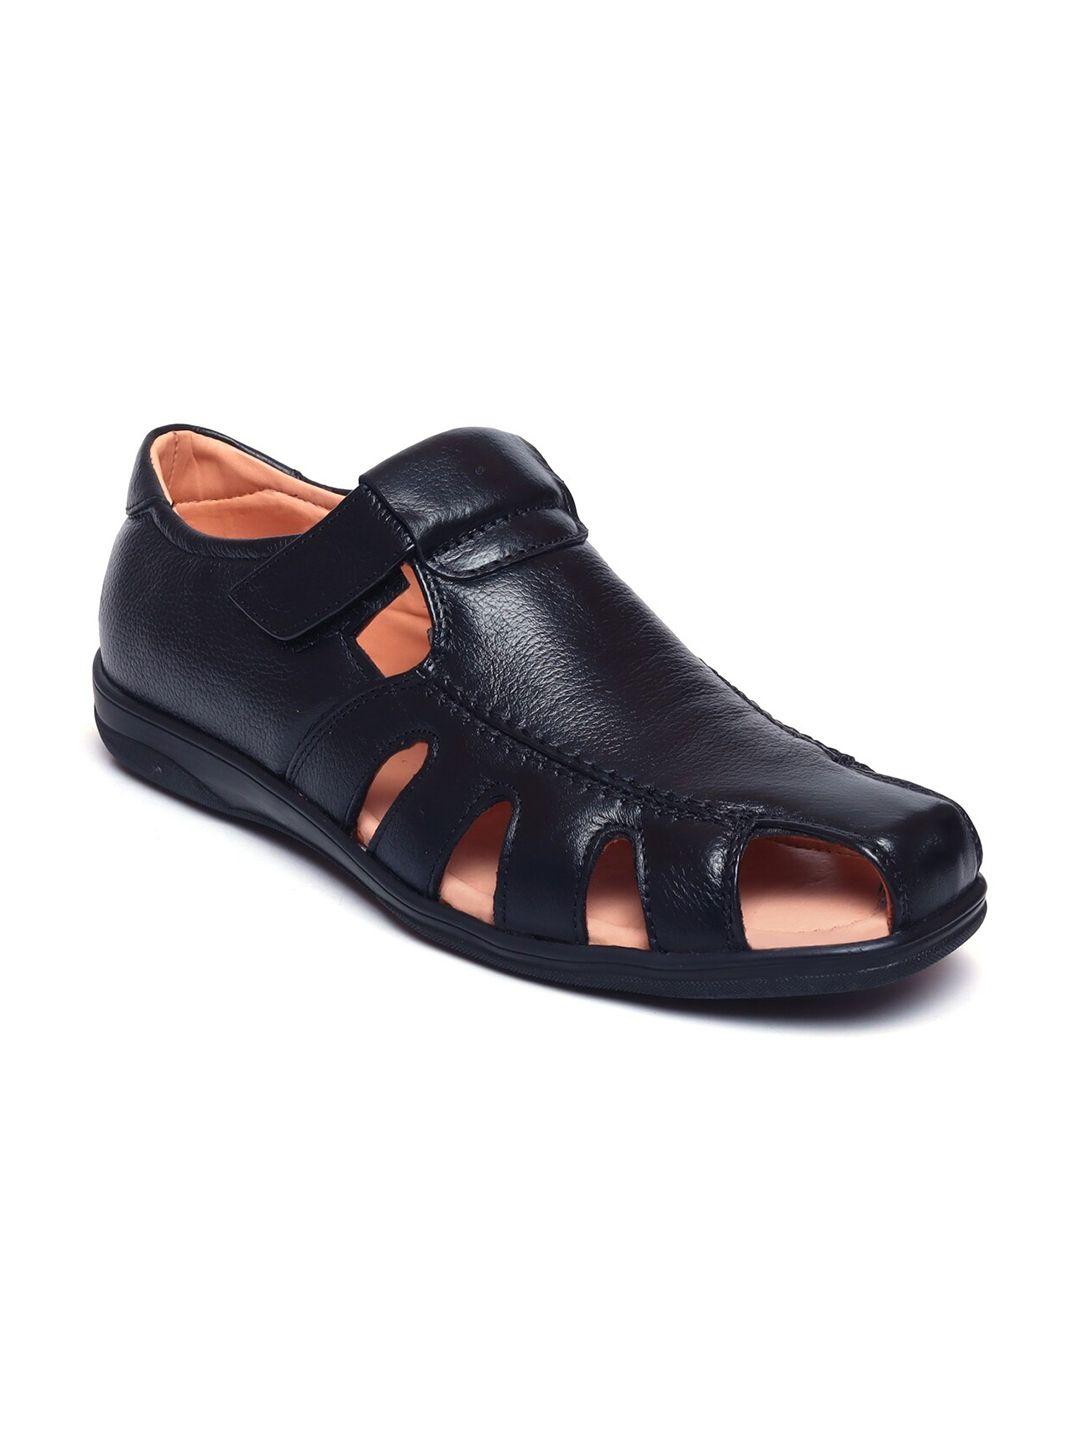 zoom shoes men black leather shoe-style sandals